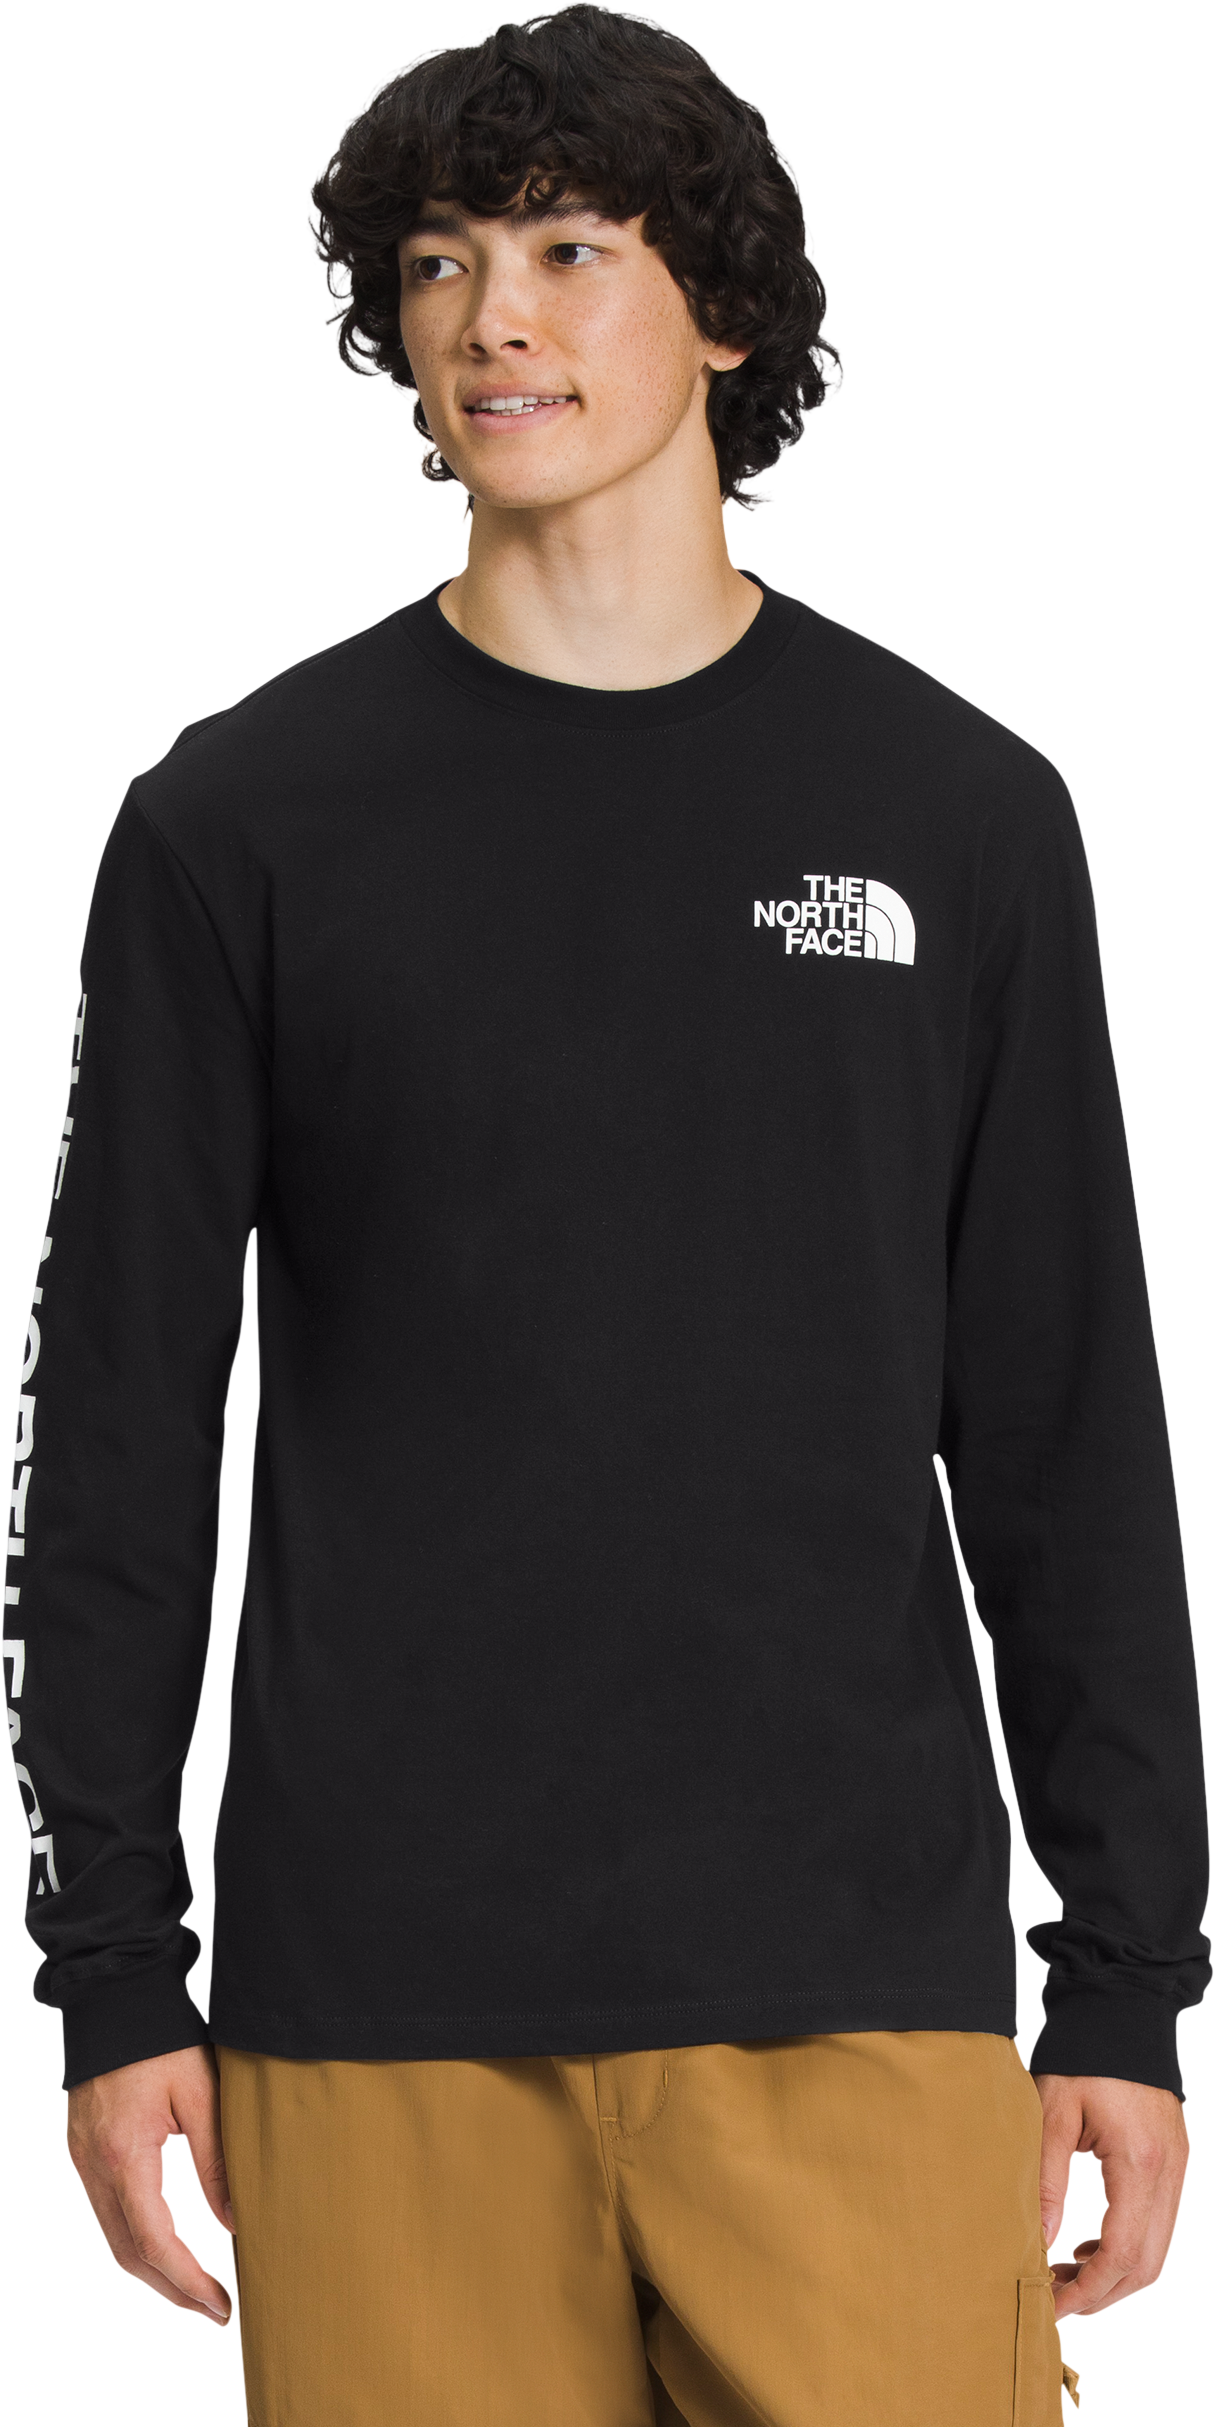 The North Face Hit Graphic Long-Sleeve T-Shirt for Men - TNF Black/TNF White - M